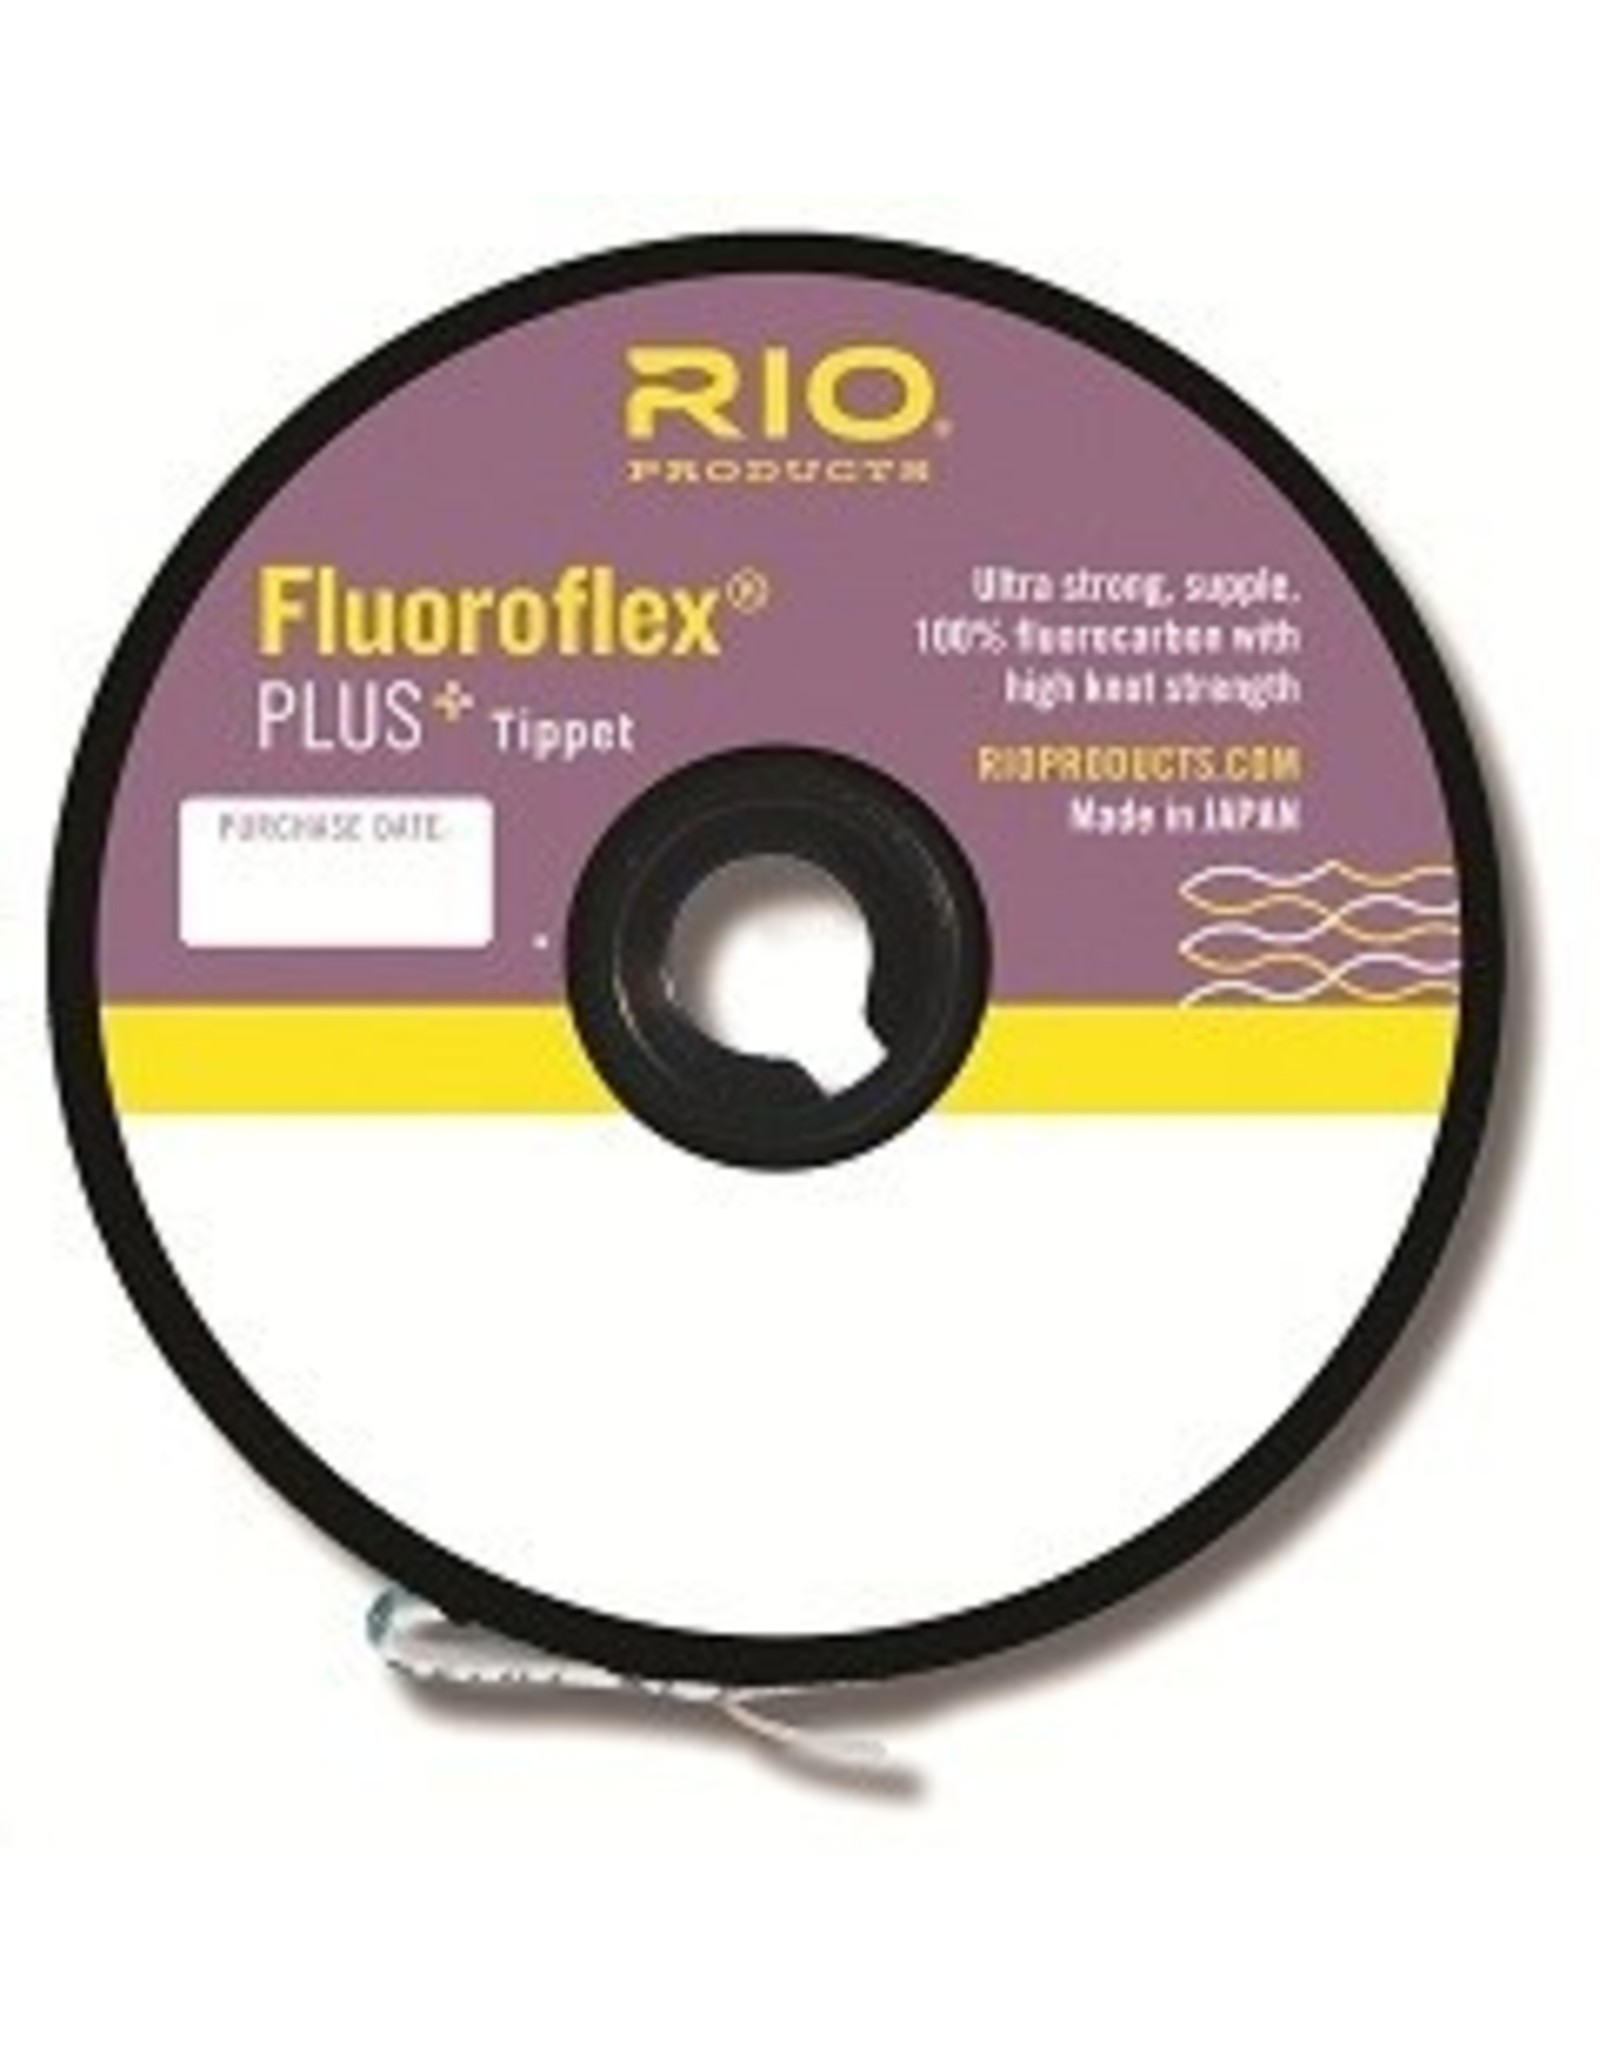 Rio Products Rio - Fluoroflex Plus Tippet